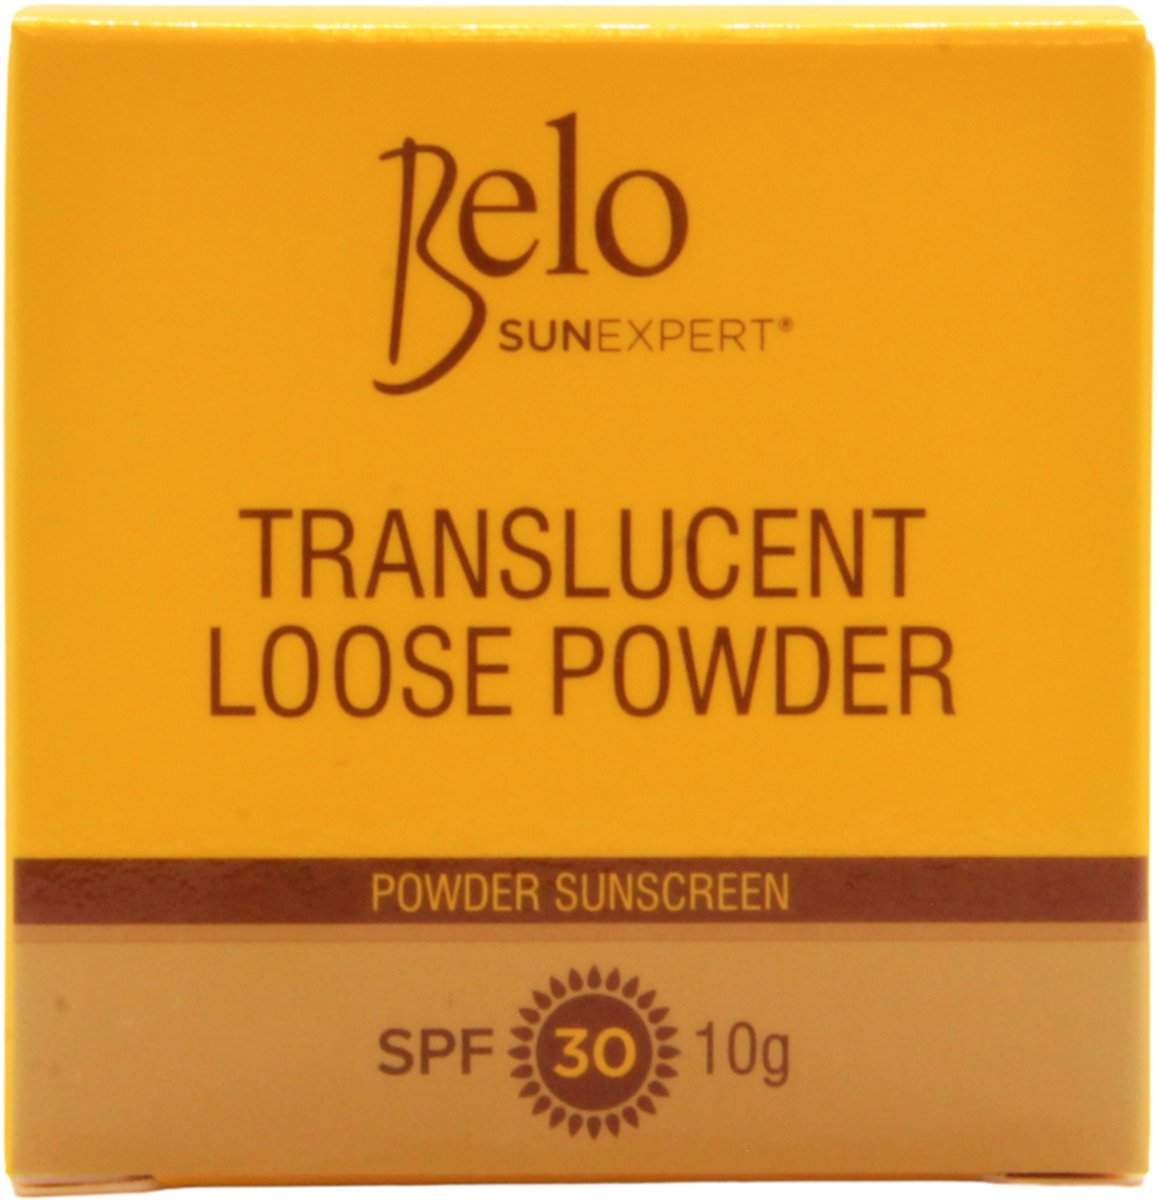 Belo Sunexpert Translucent loose powder SPF 30 10 gr